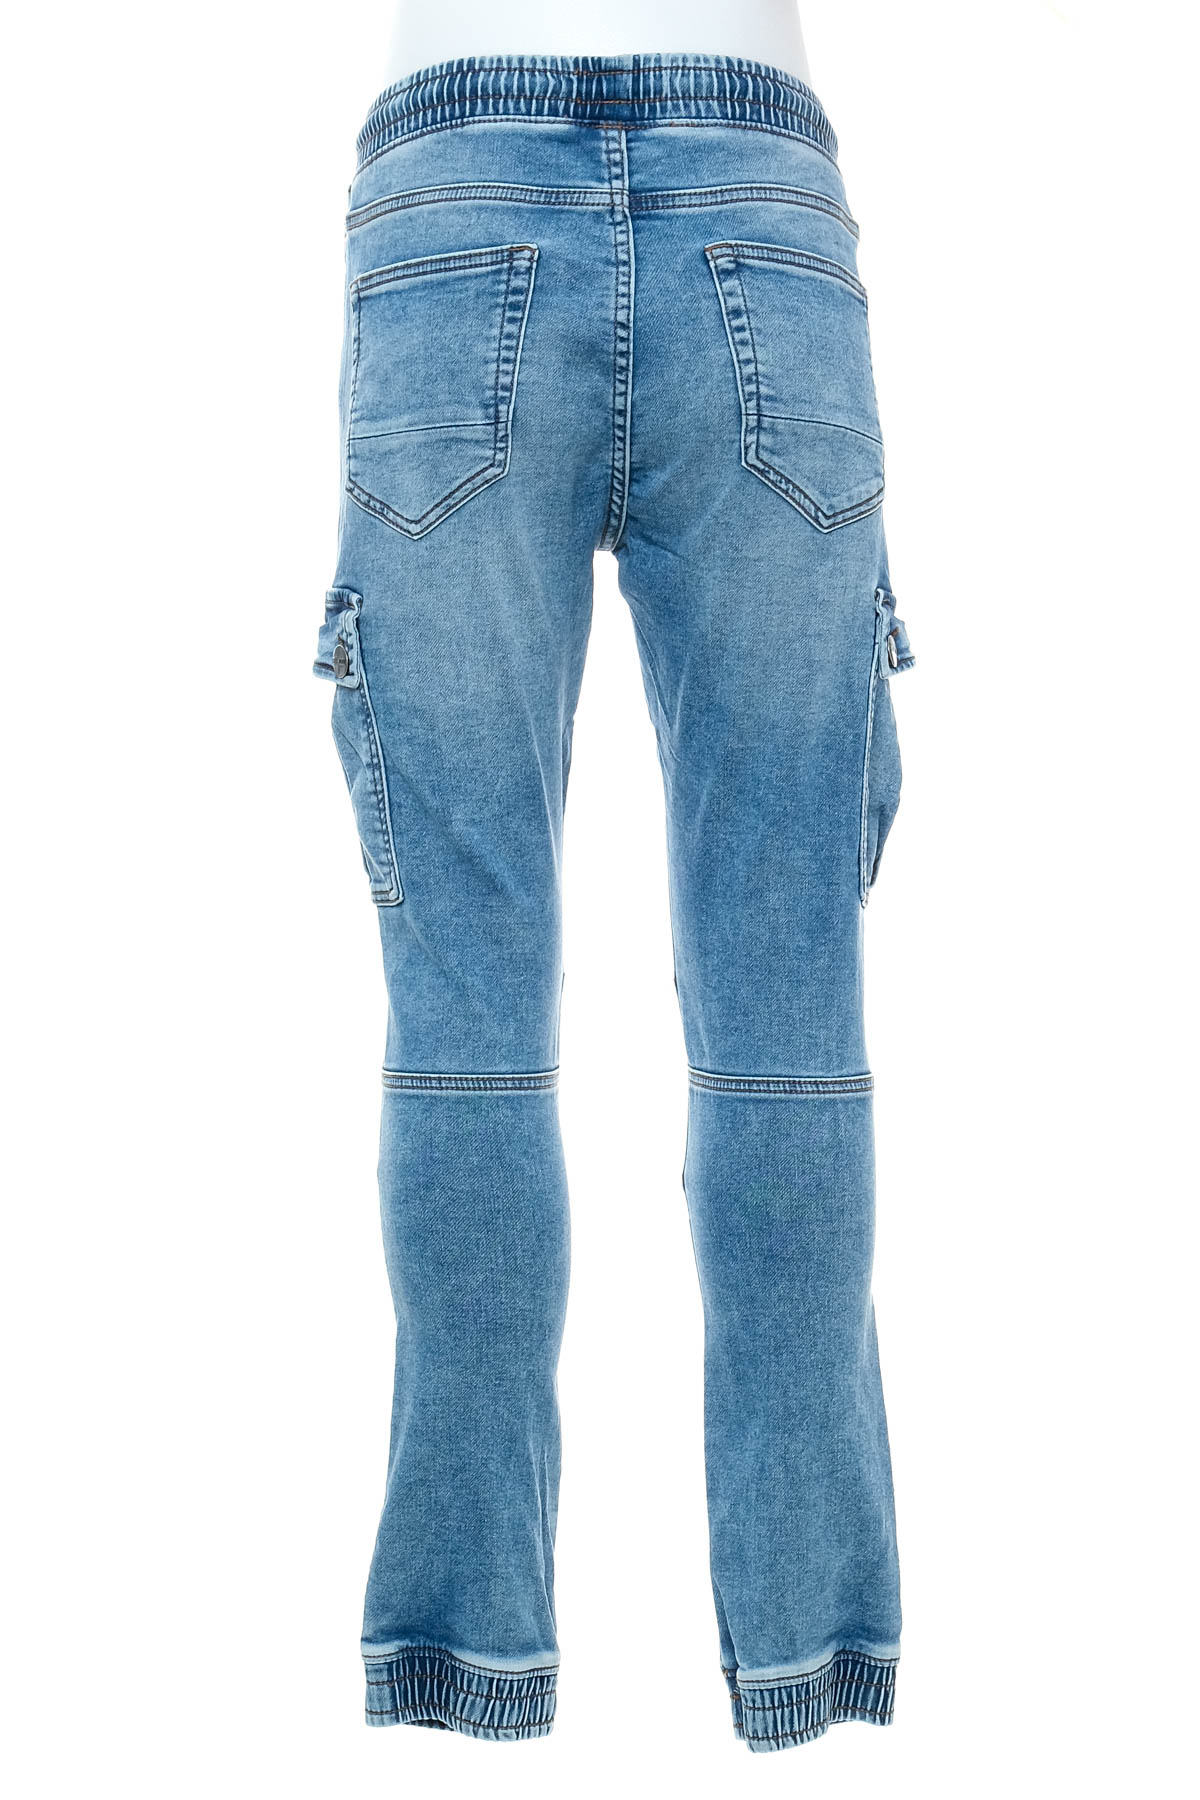 Men's jeans - Savvy - 1